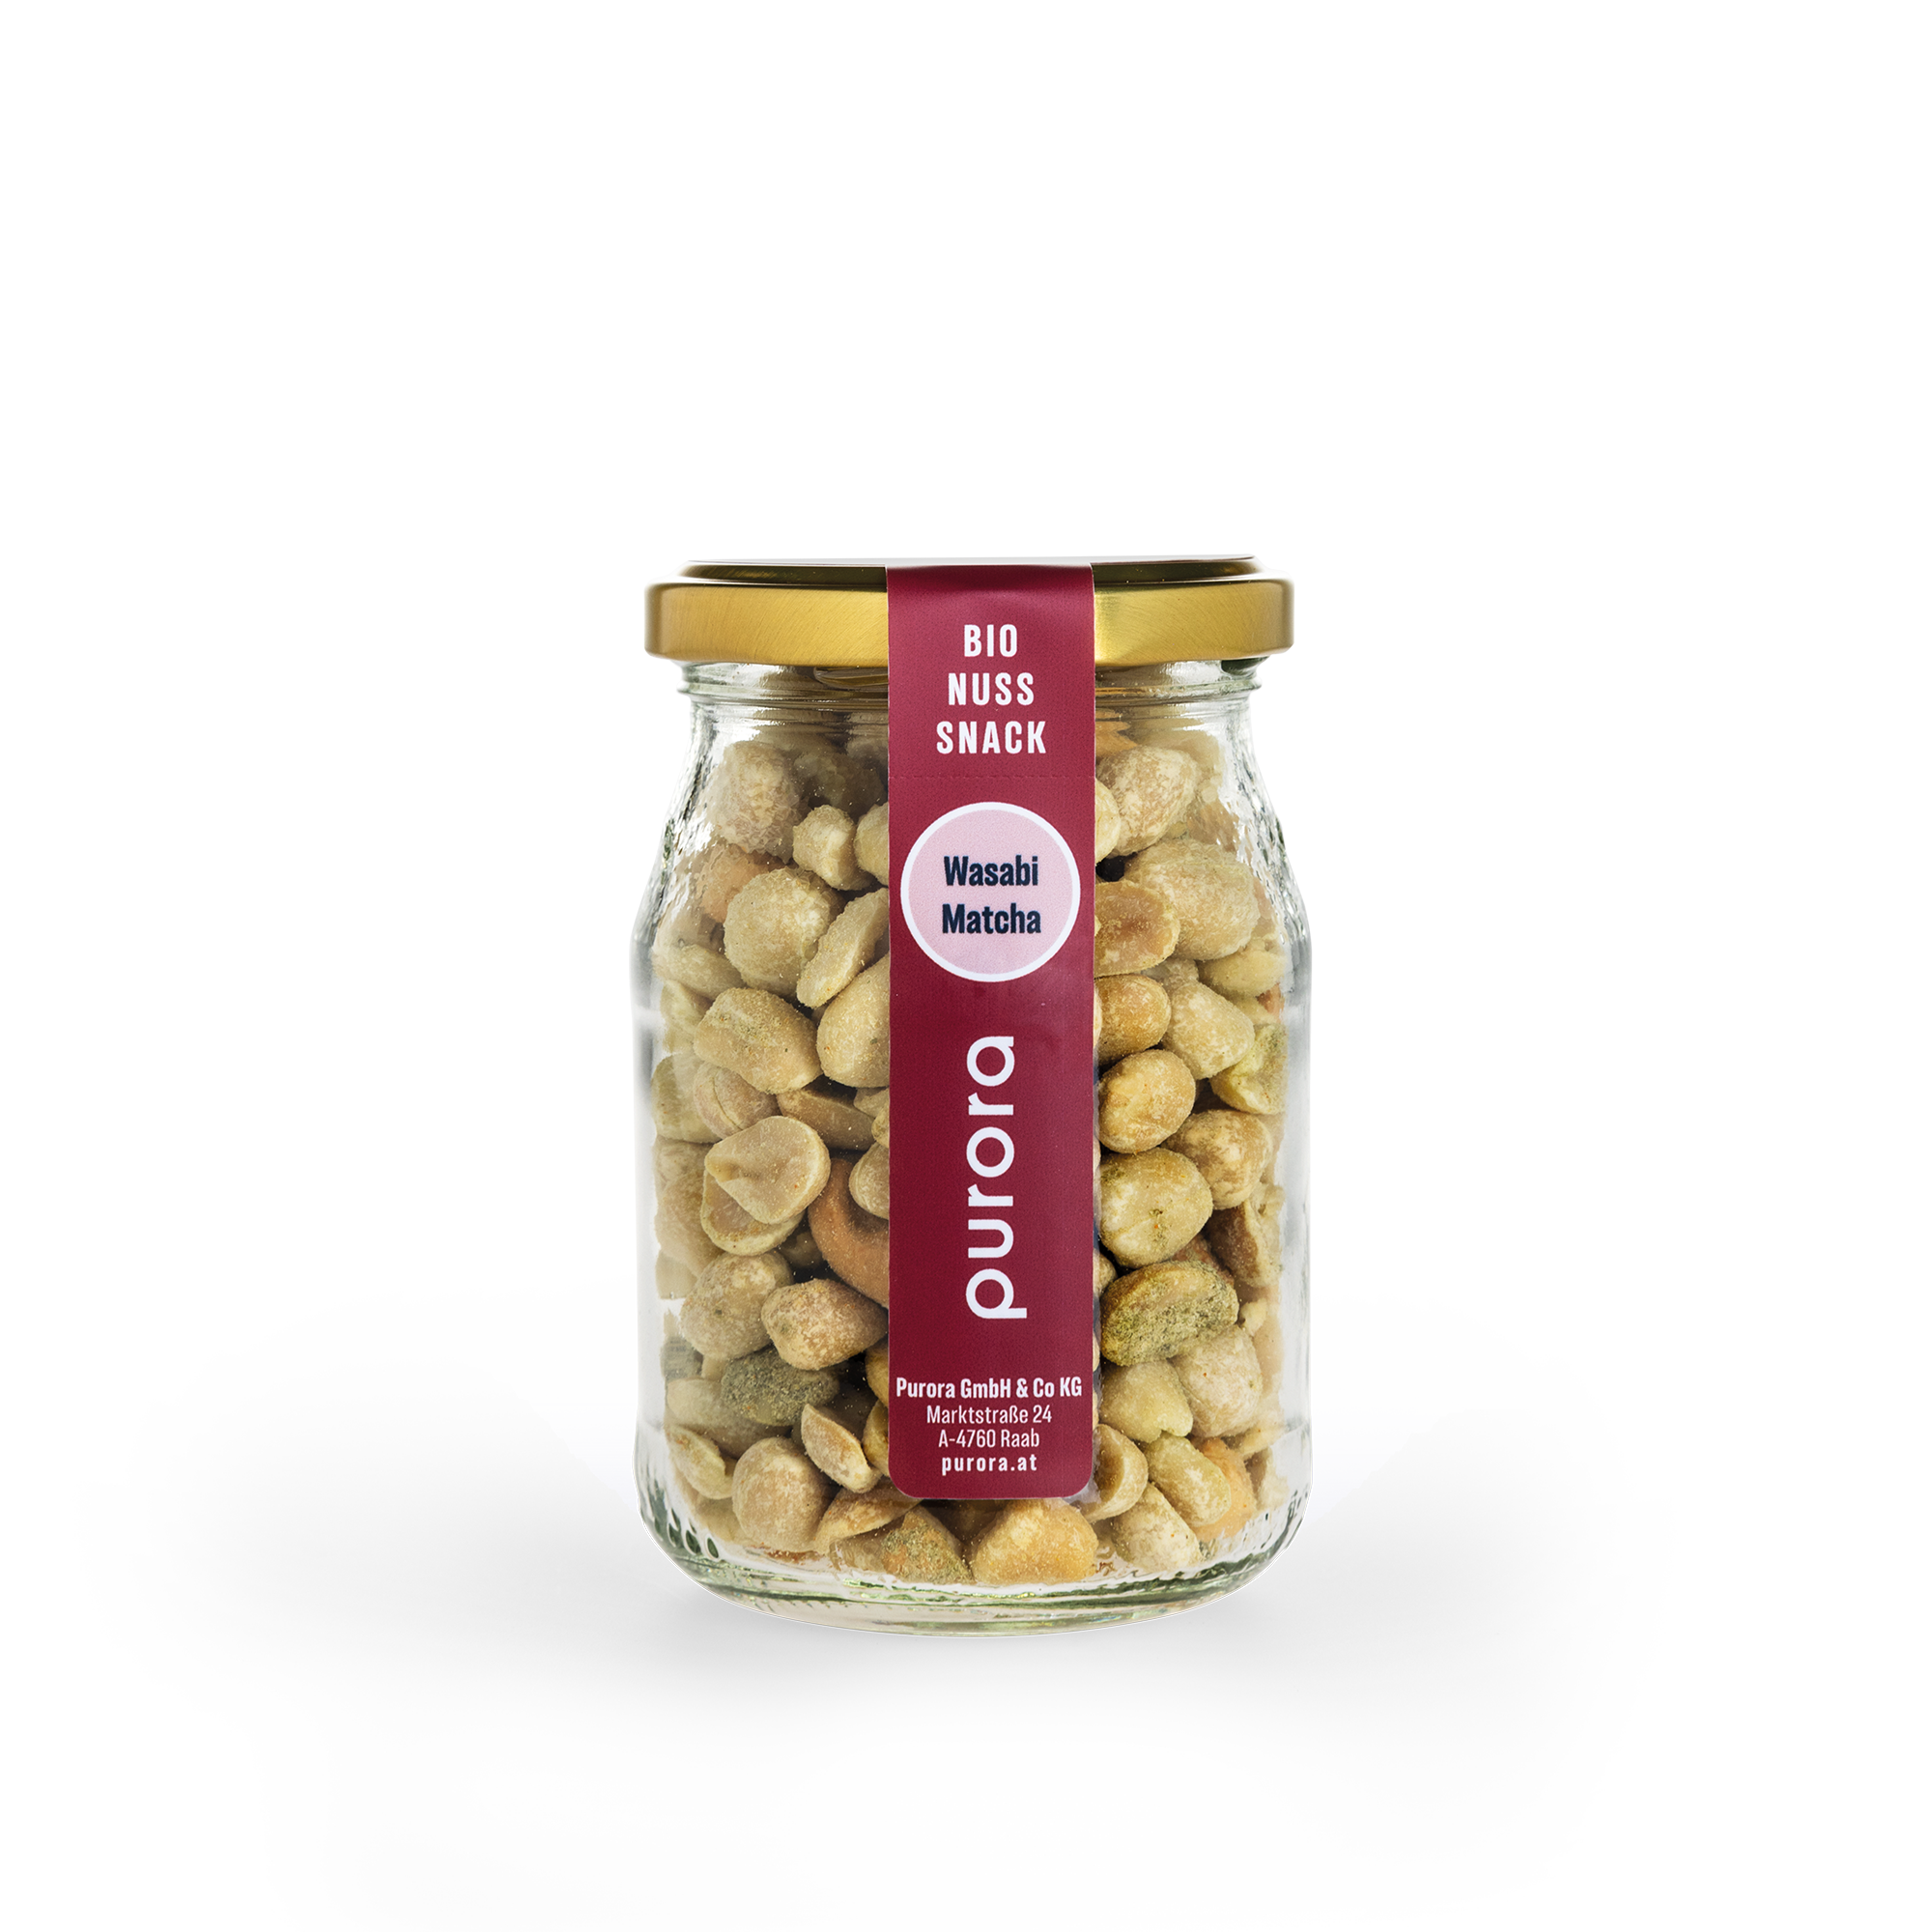 Nut snack | Wasabi, Matcha 150g